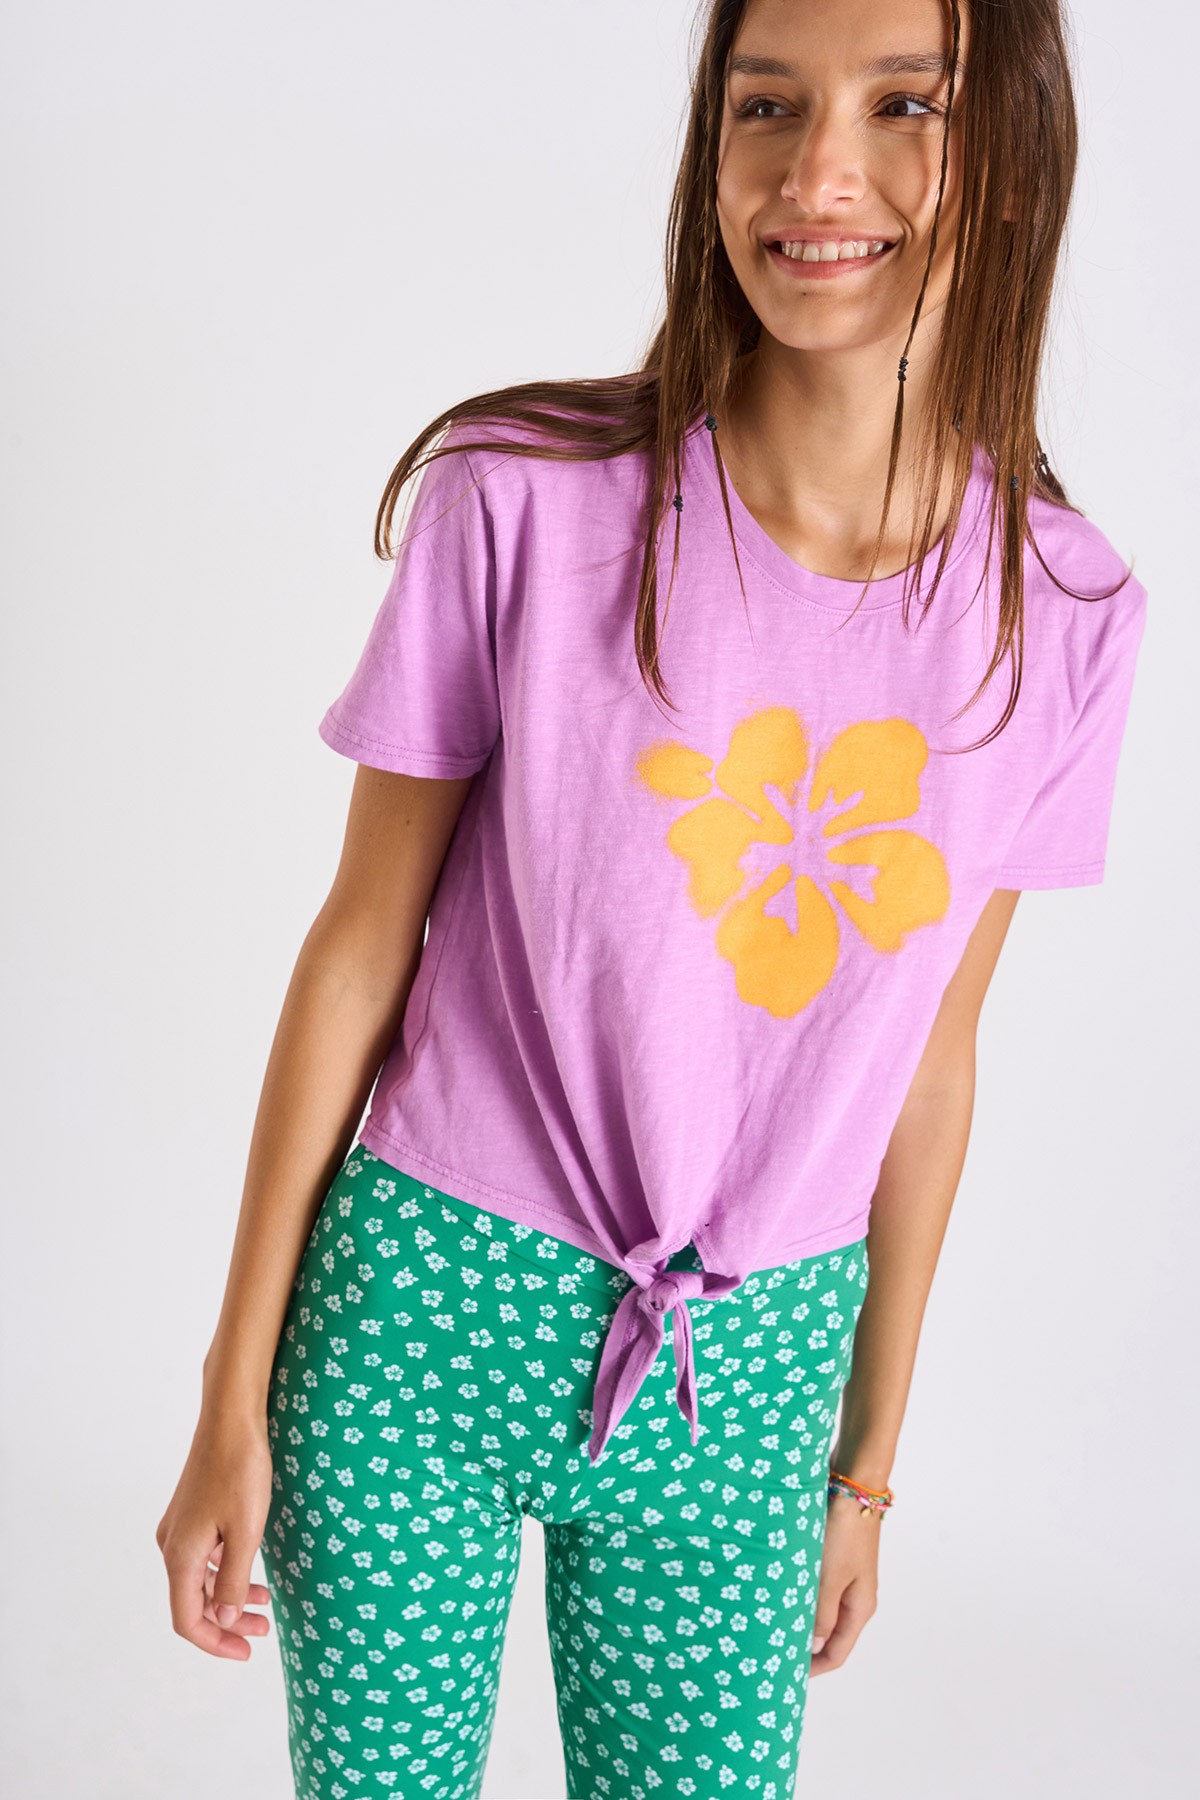 Chado Teeclub women's tied lilac t-shirt | Banana Moon®